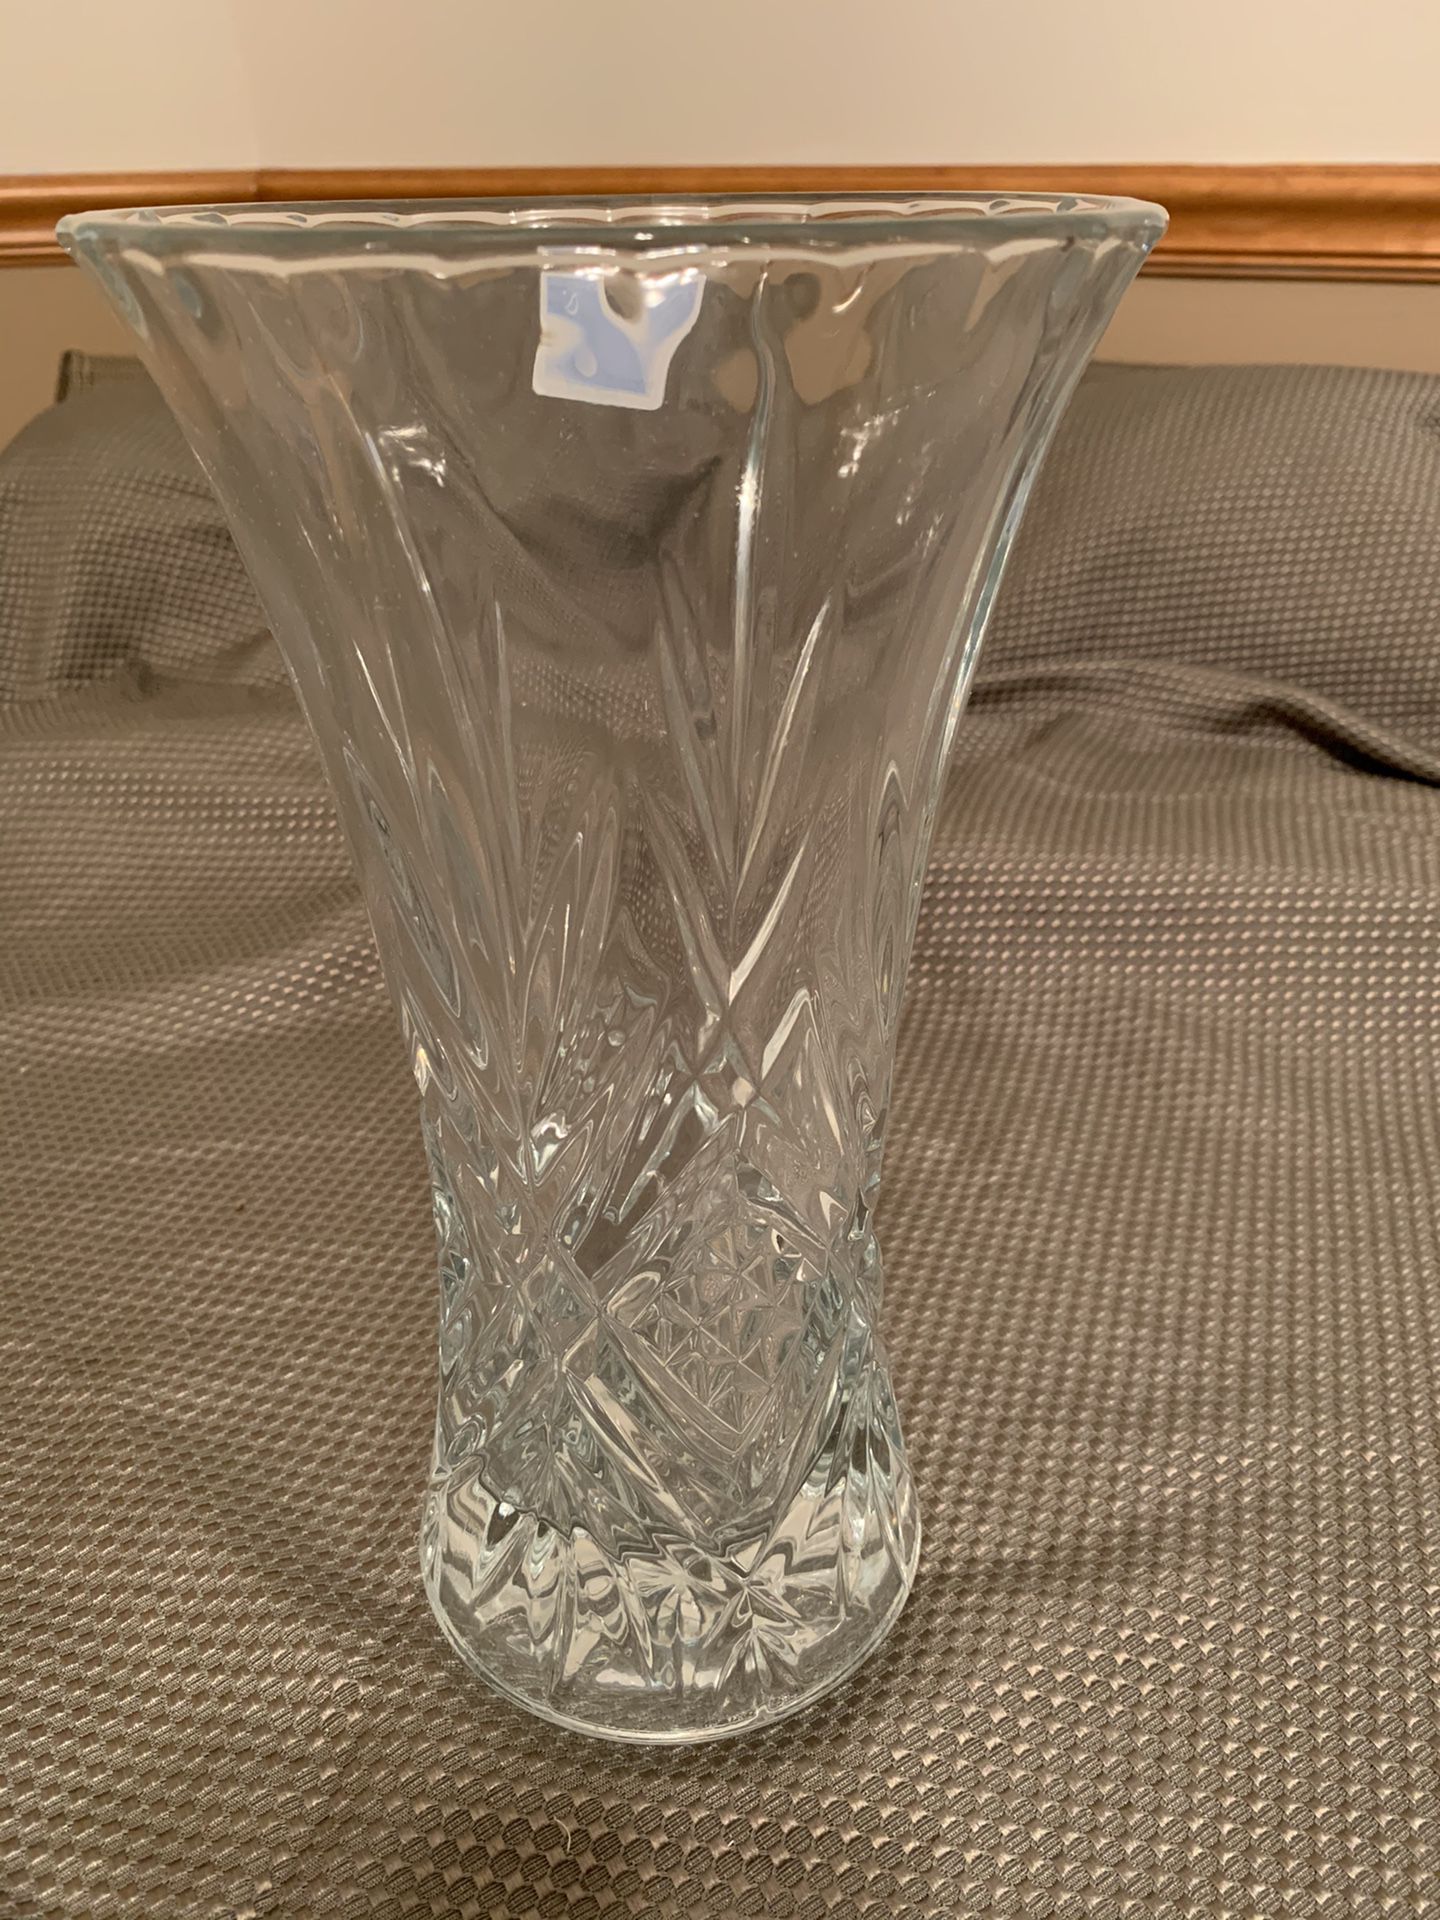 Mikasa Celebrations Crystal Vase - Brand New